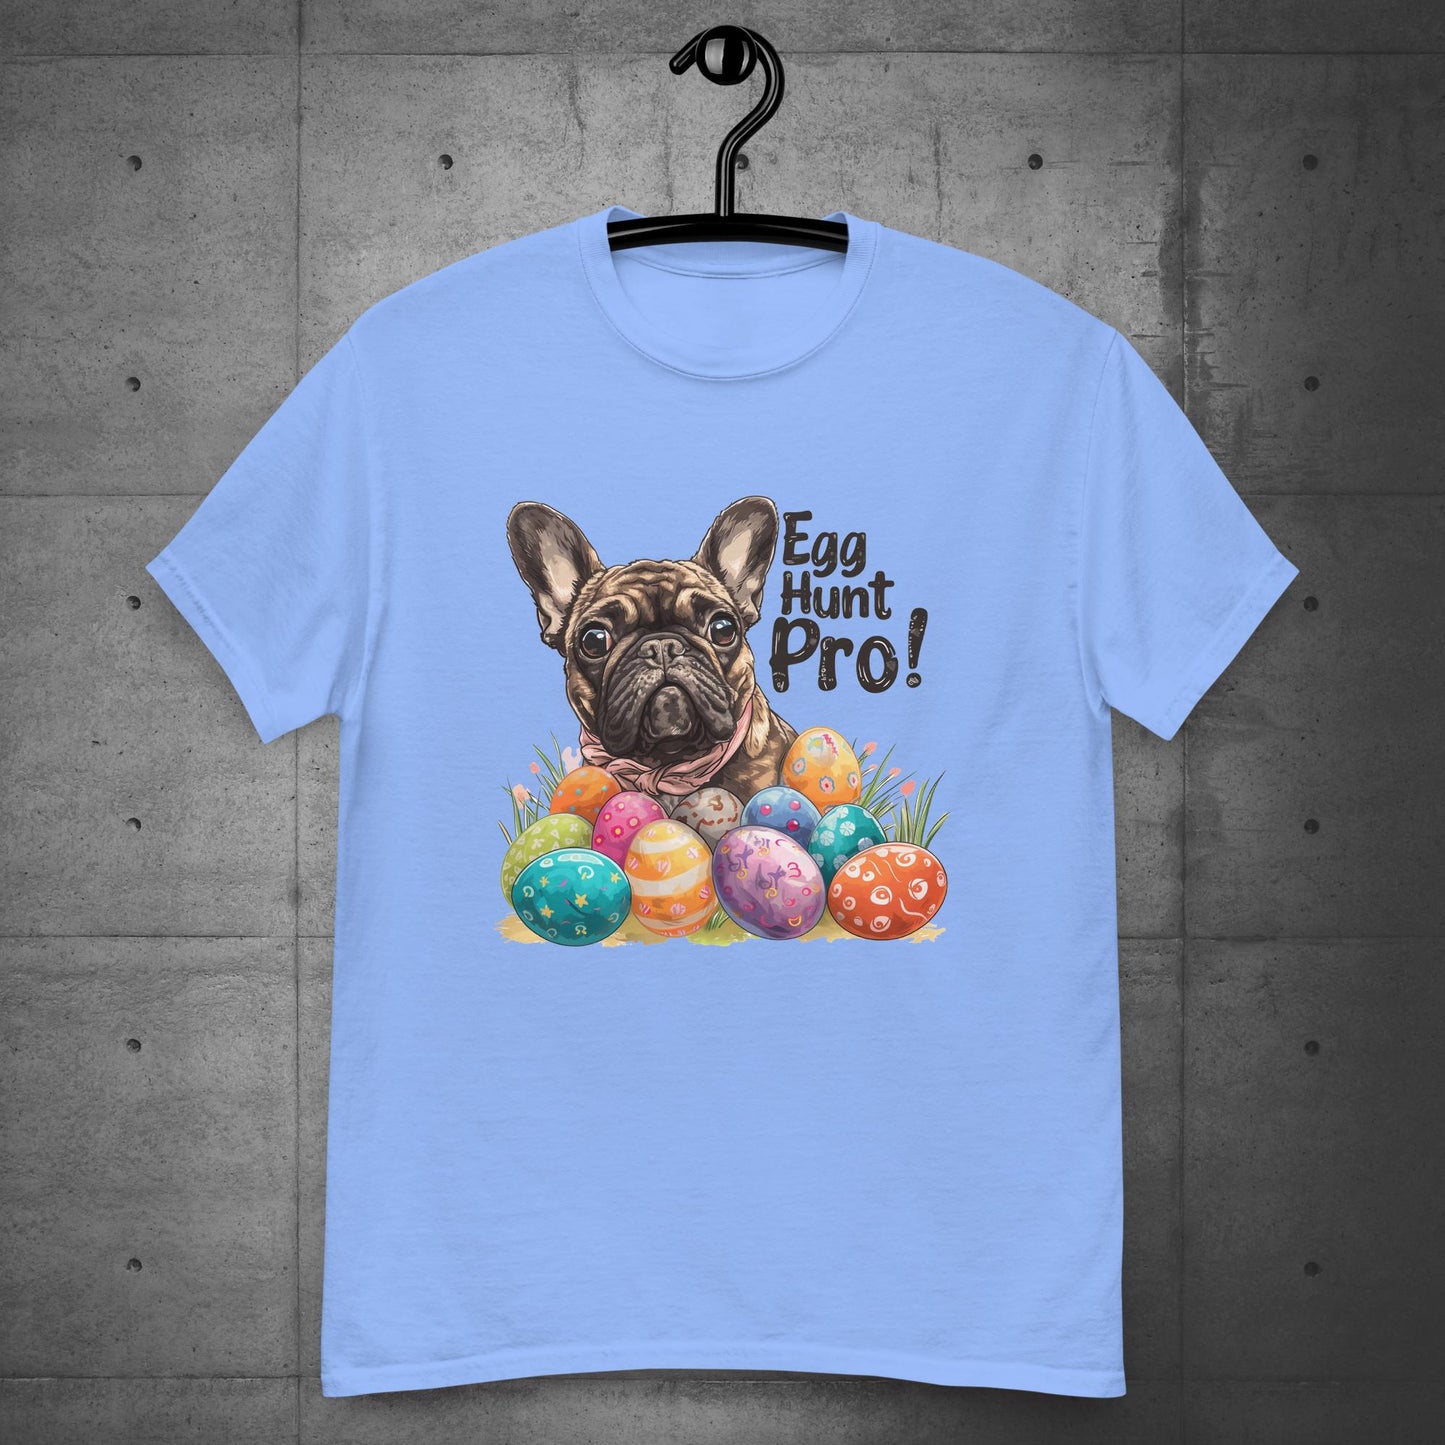 "Egg Hunt Pro!" French Bulldog - Unisex T-shirt